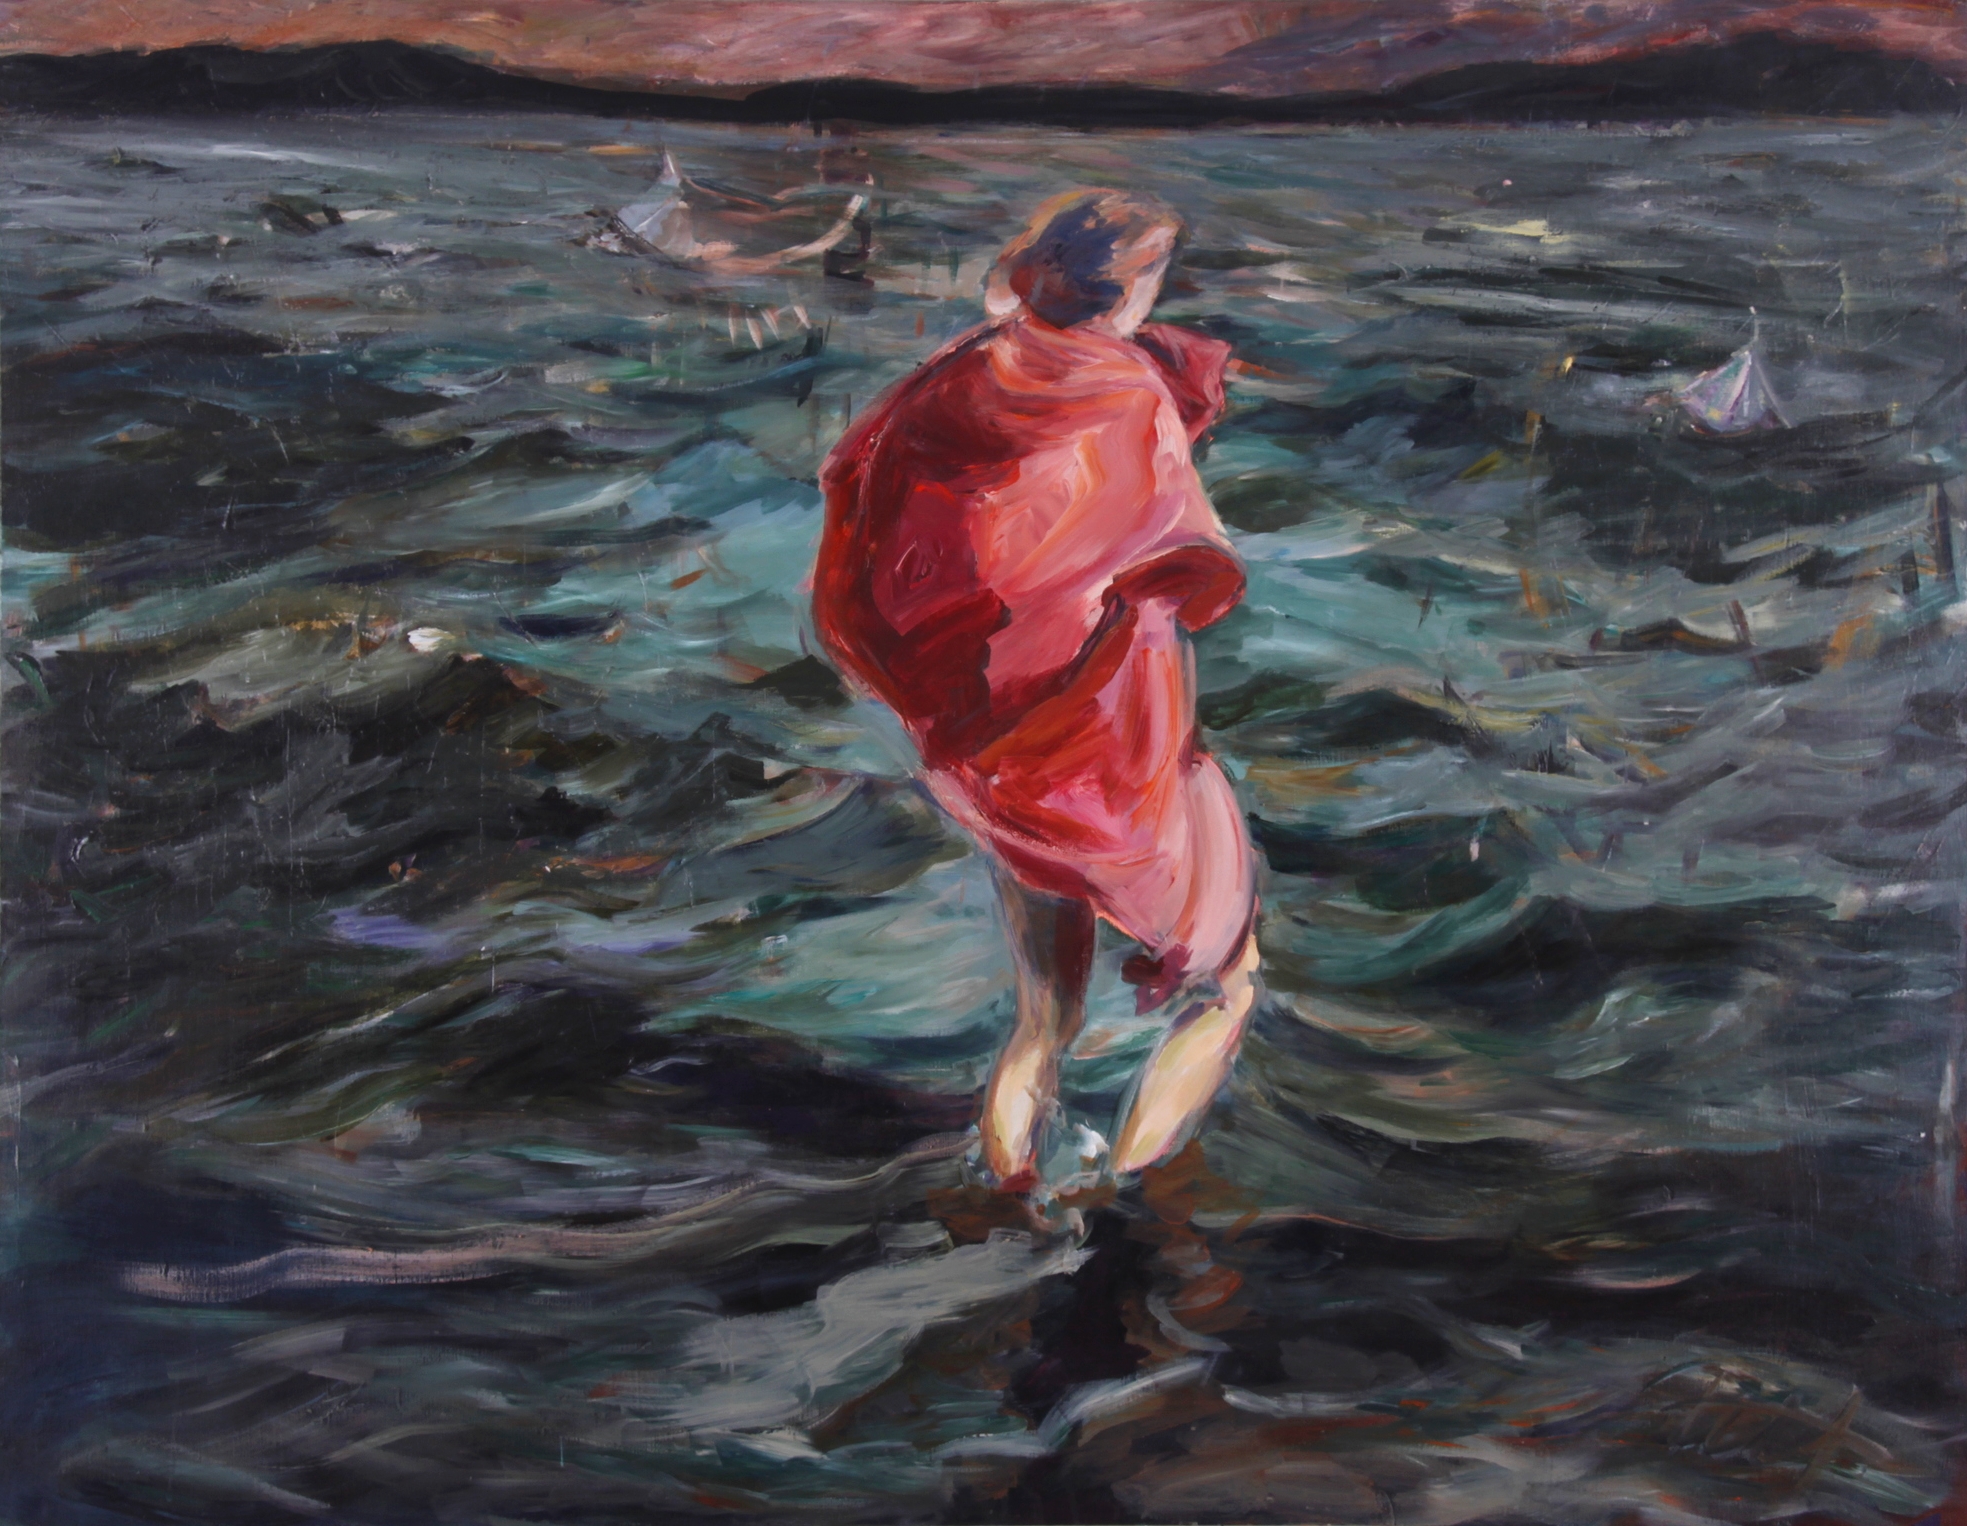 Lamentation, 1994, oil on canvas, 48" x 60".